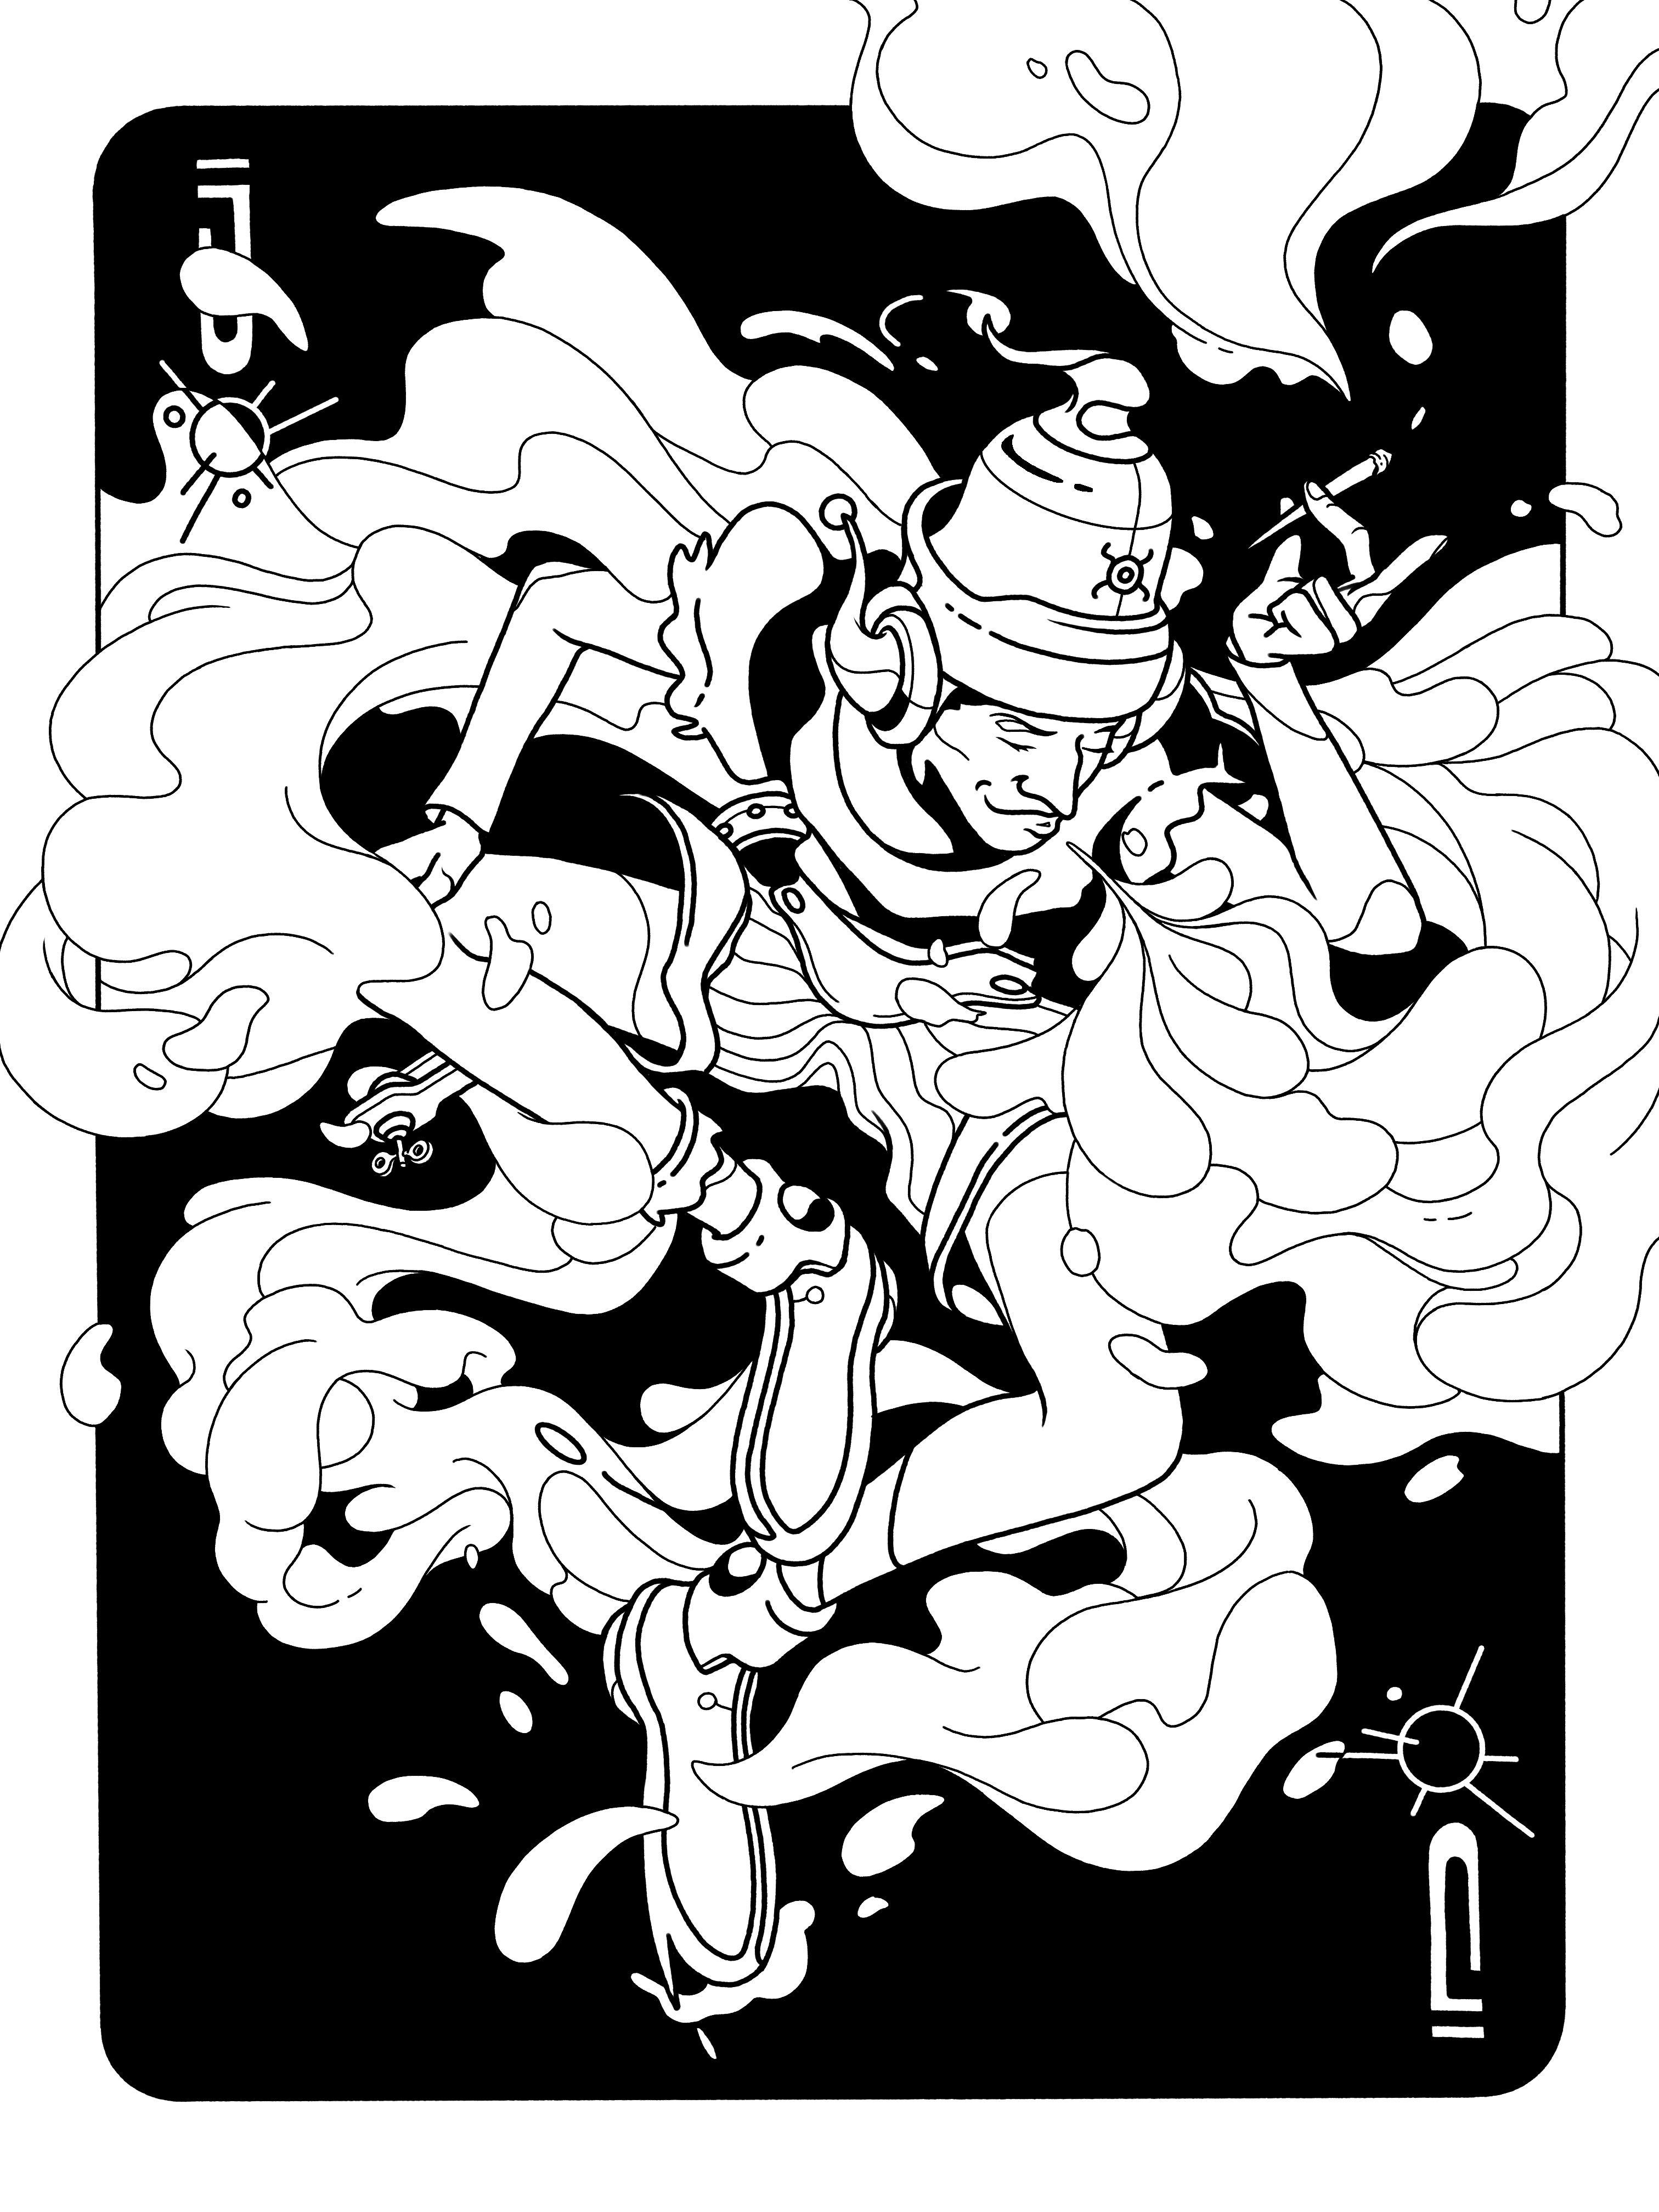 Joker Smoker (Black & White) by DirtyRobot